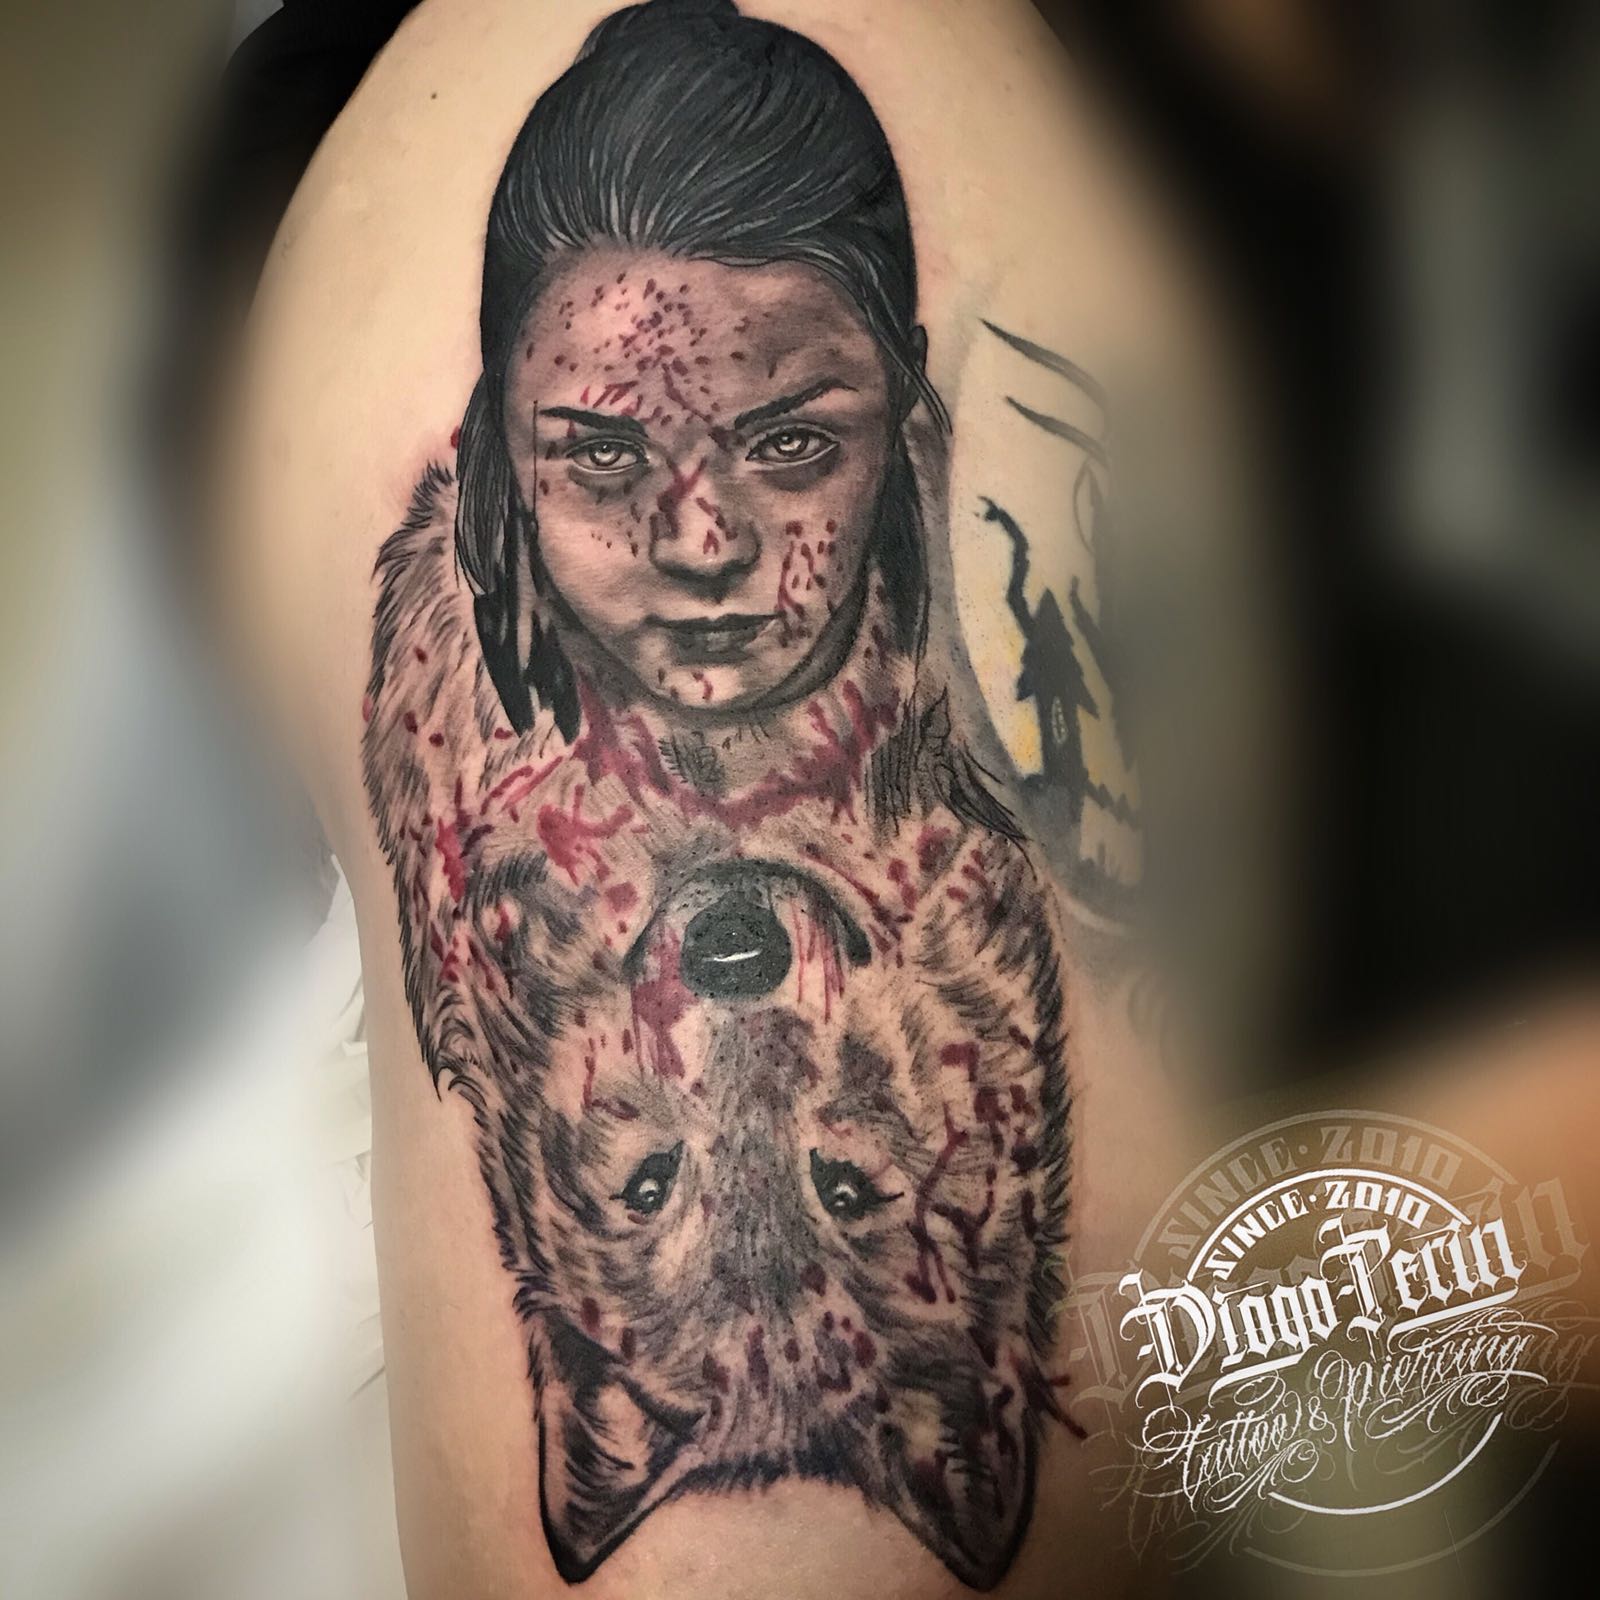 Tatuaje realizado por @diogoperin #blackandwhite #gameofthrones #ariastark #wolf #tattoospain #tattooalicante #tattoosantapola